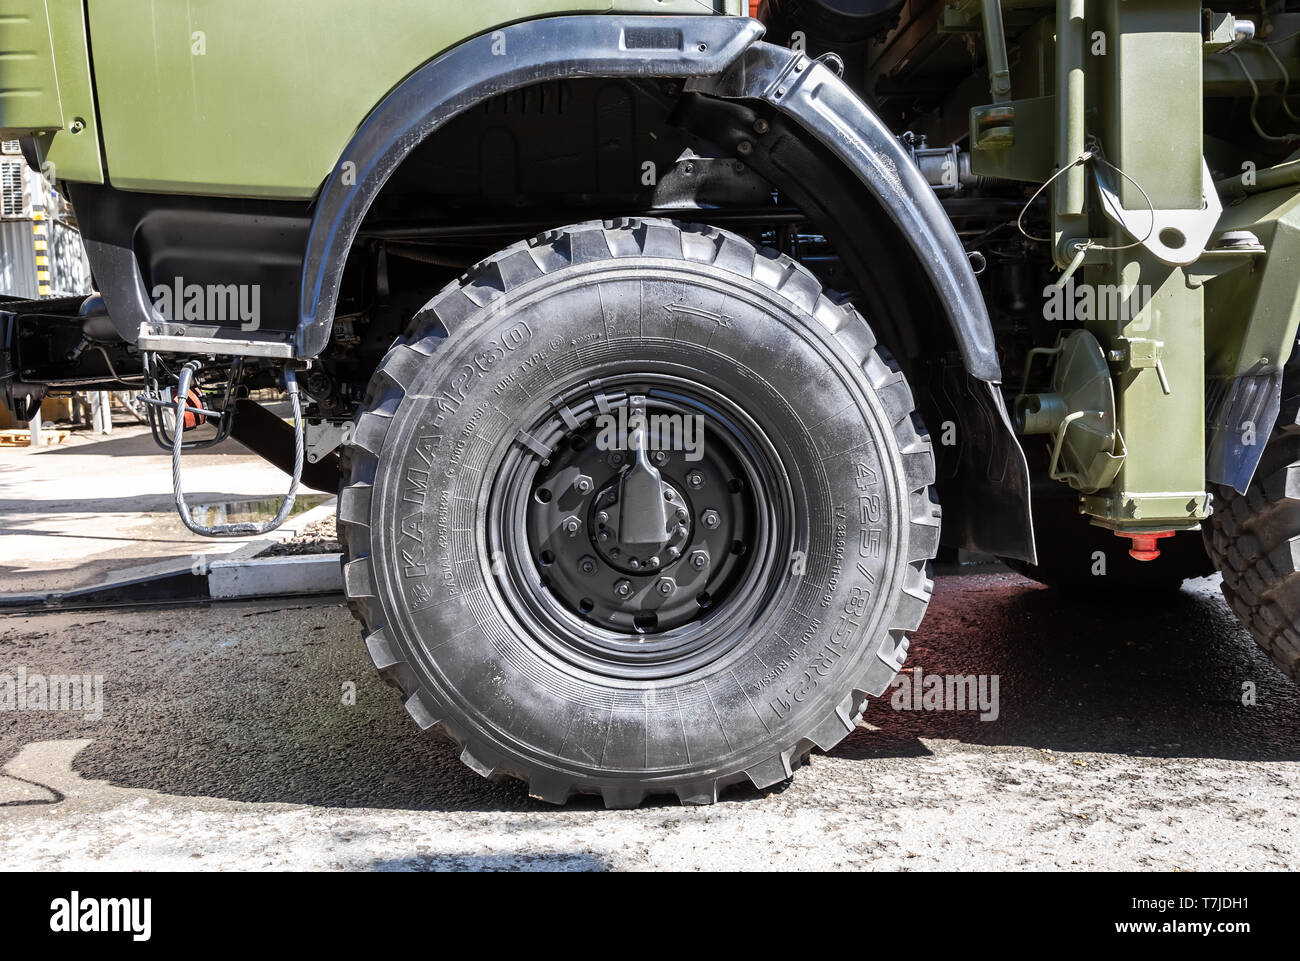 Samara, Russia - May 4, 2019: Close up view of Kamaz vehicle wheel with Kama  tire Stock Photo - Alamy